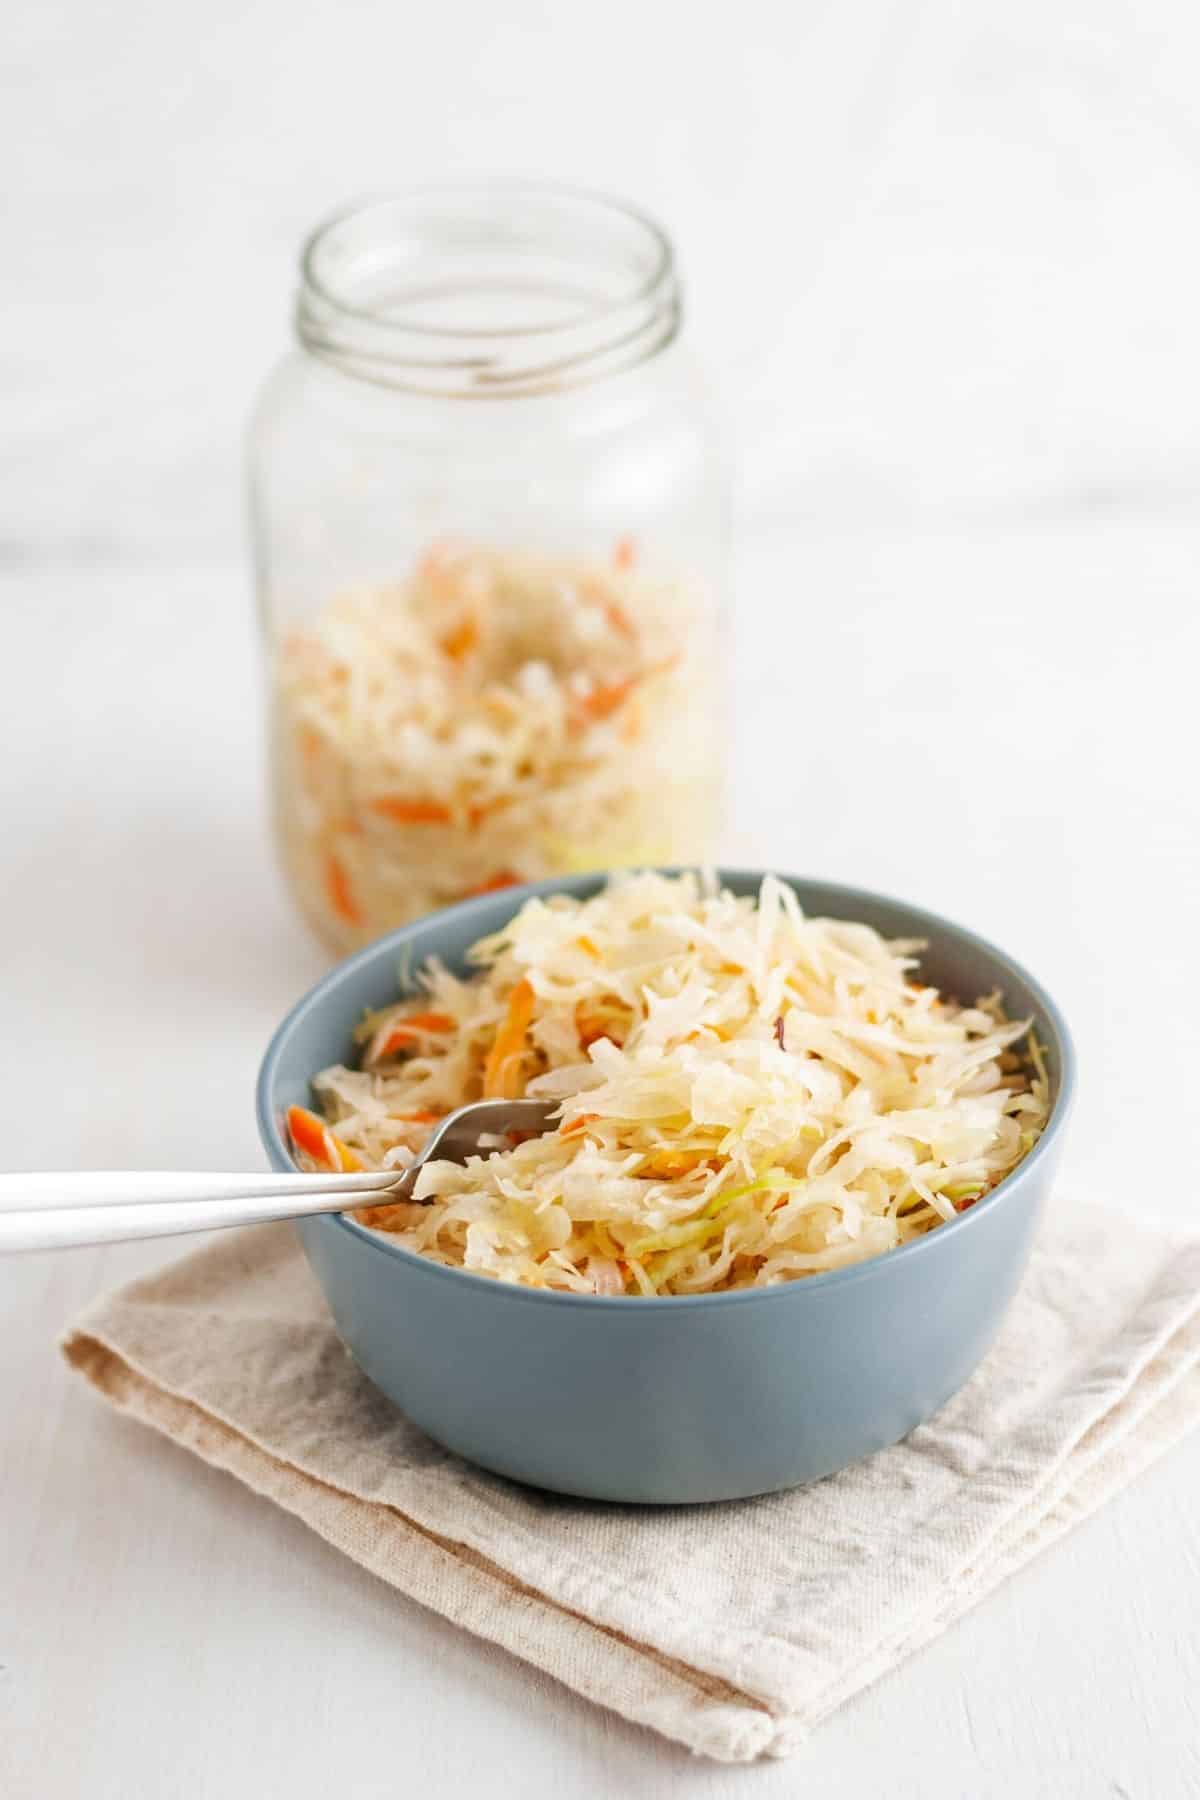 jar and bowl with sauerkraut